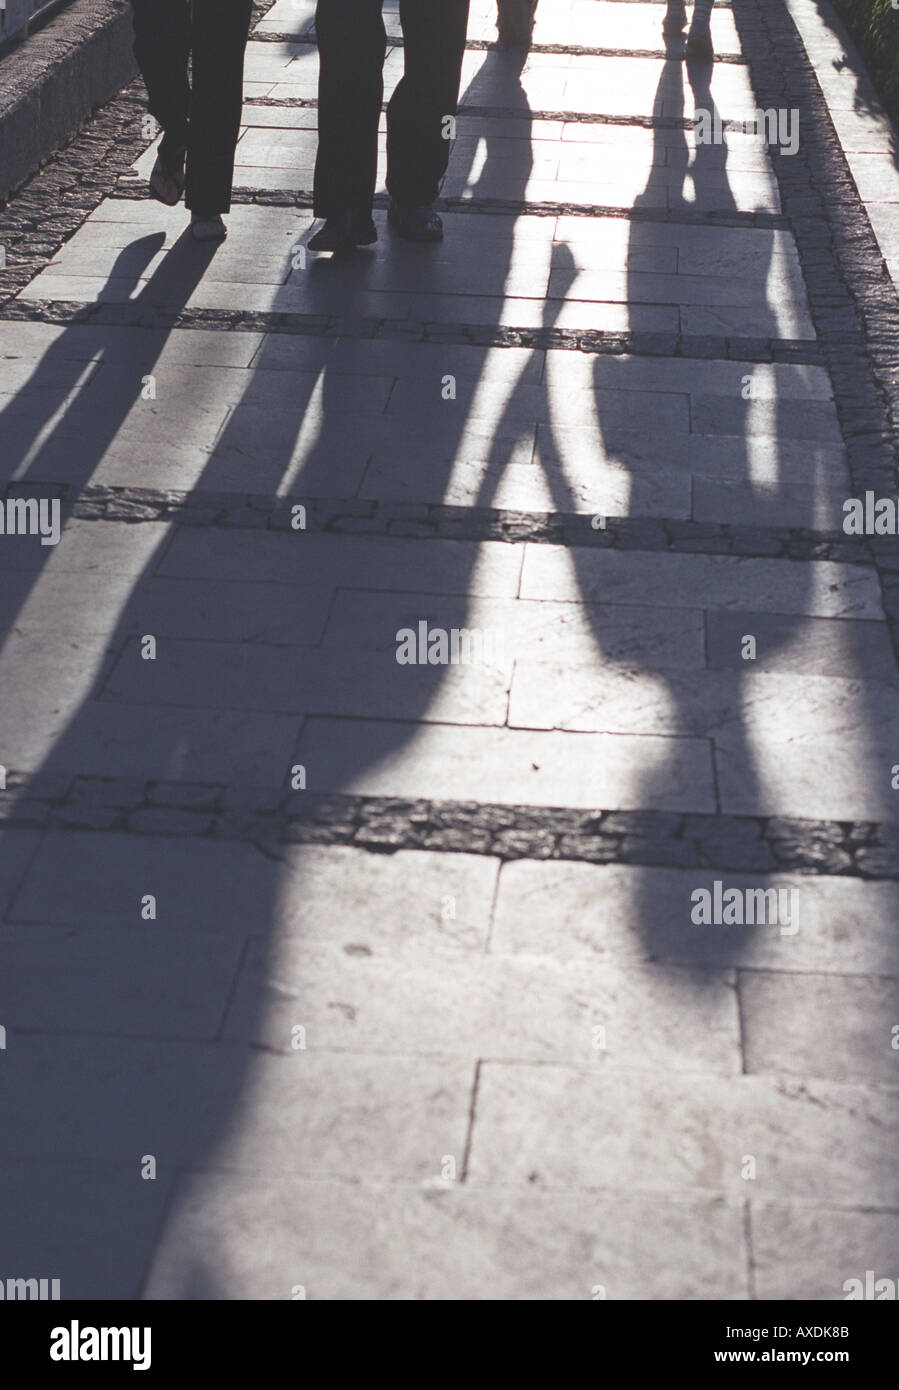 shadows of pedestrians vertical color architecture detail sidewalk brick walkway people pedestrians legs walking movement shadow Stock Photo